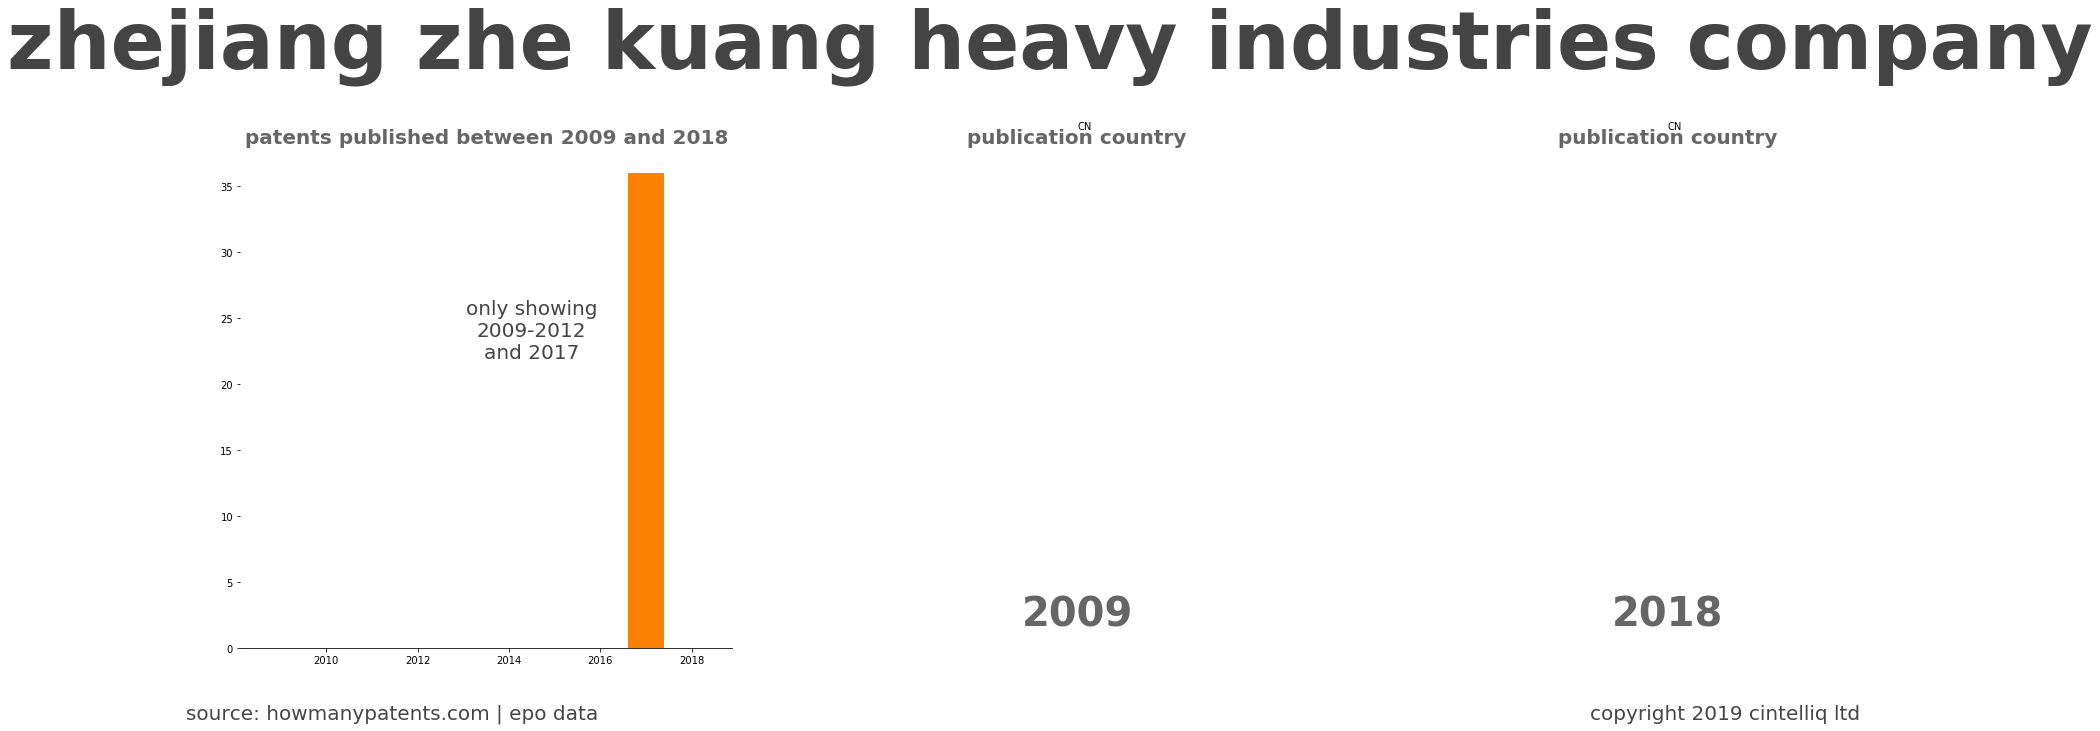 summary of patents for Zhejiang Zhe Kuang Heavy Industries Company